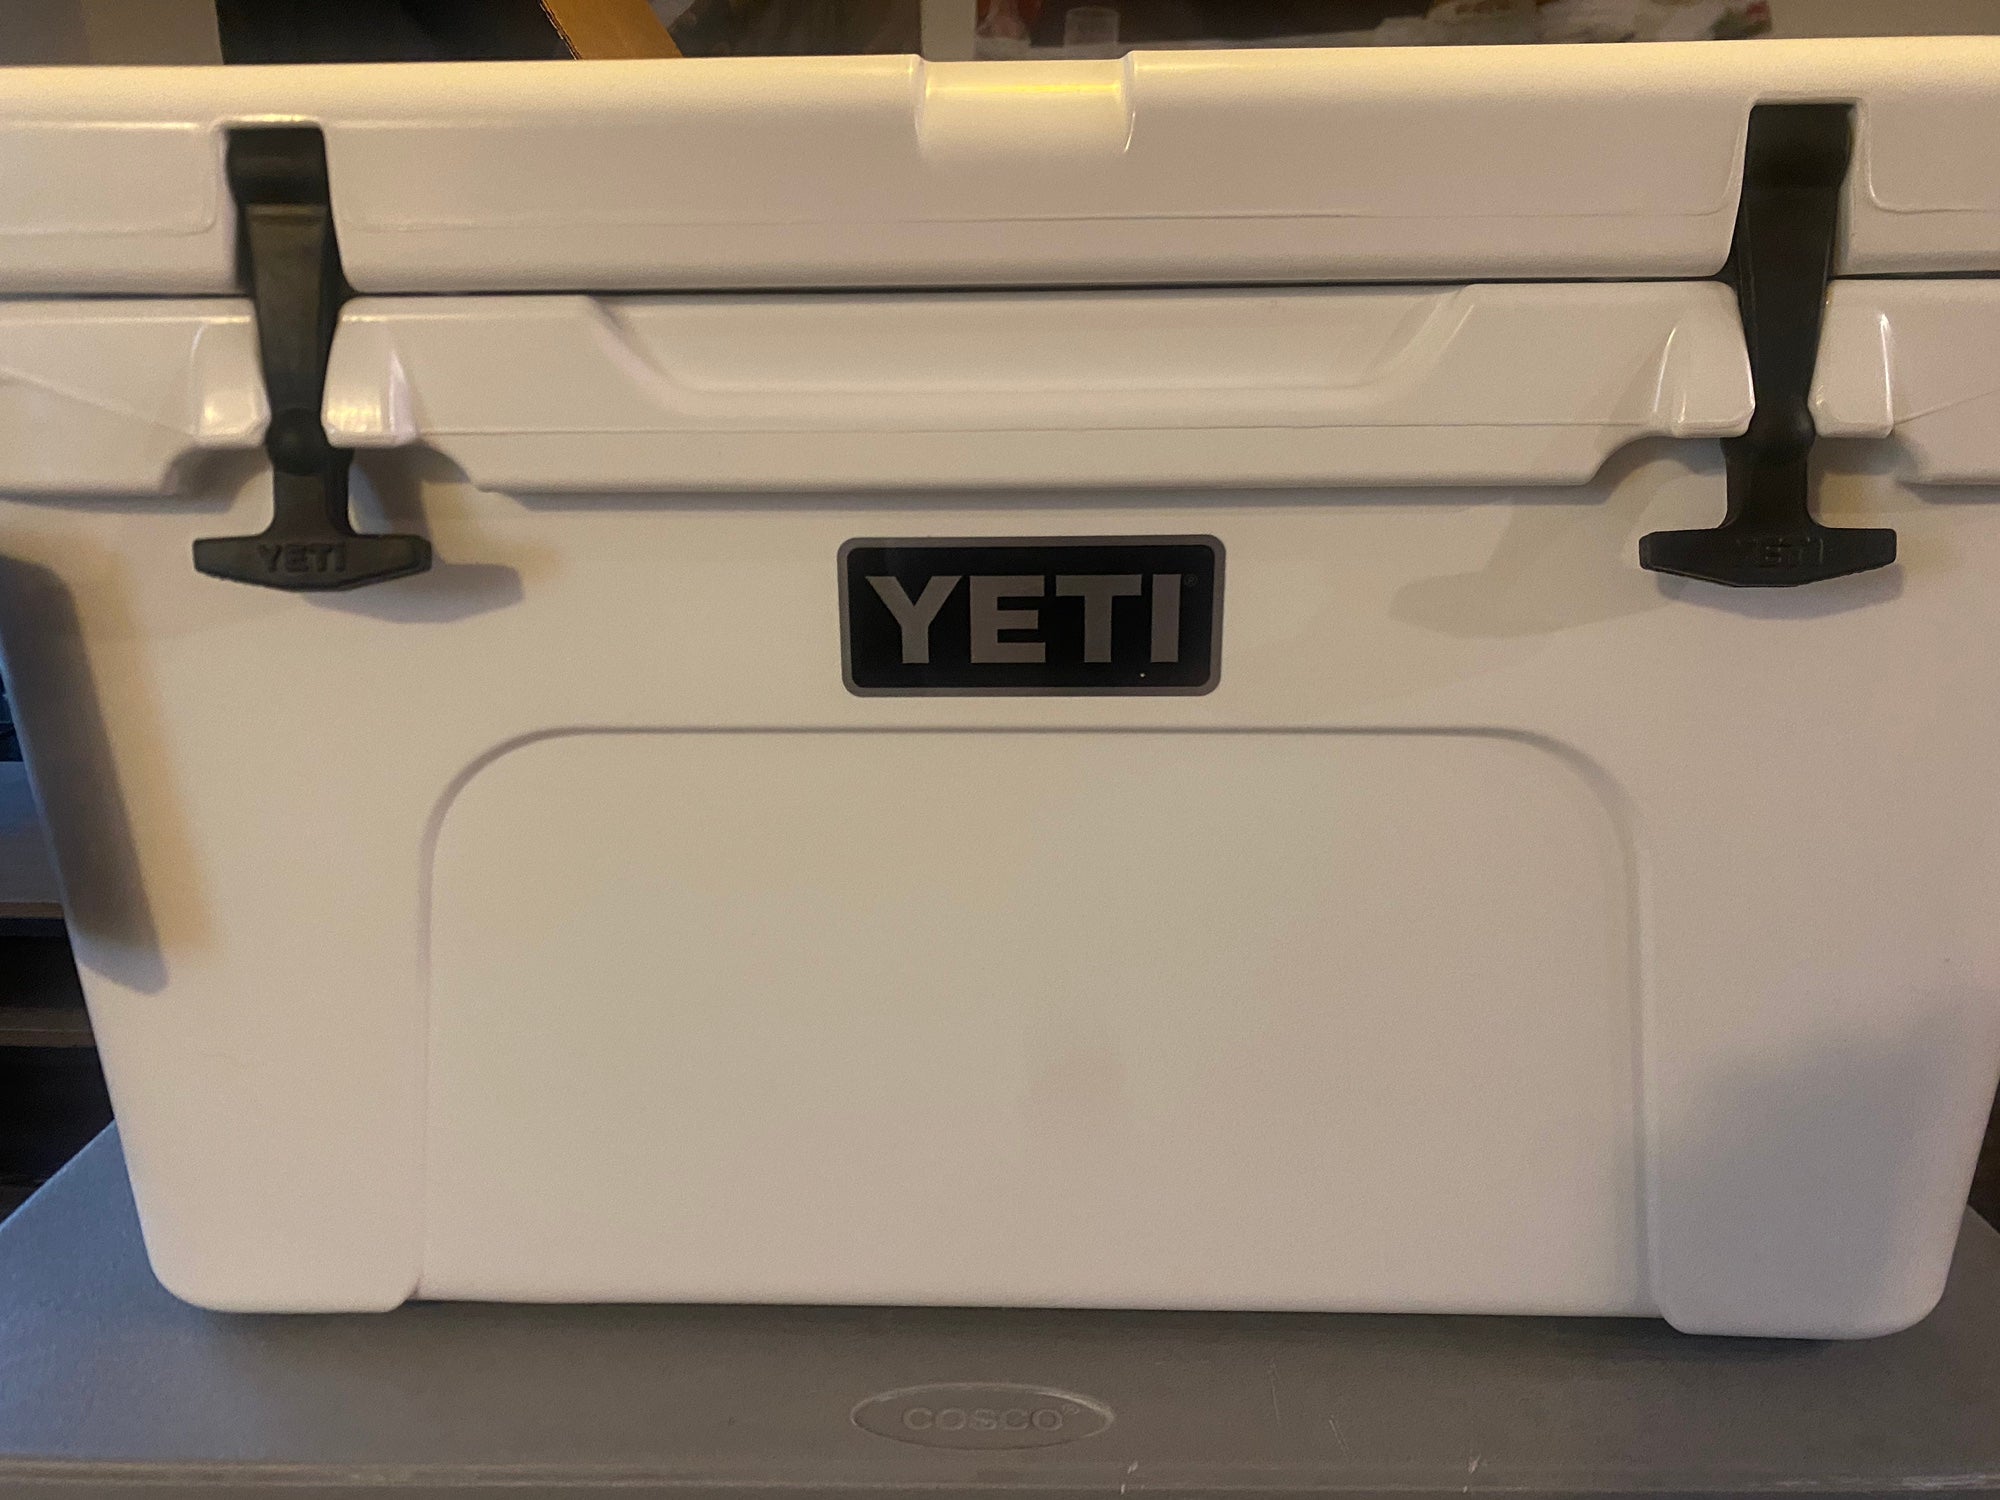 YETI Tundra 45 Hard Cooler – Occasionally Yours